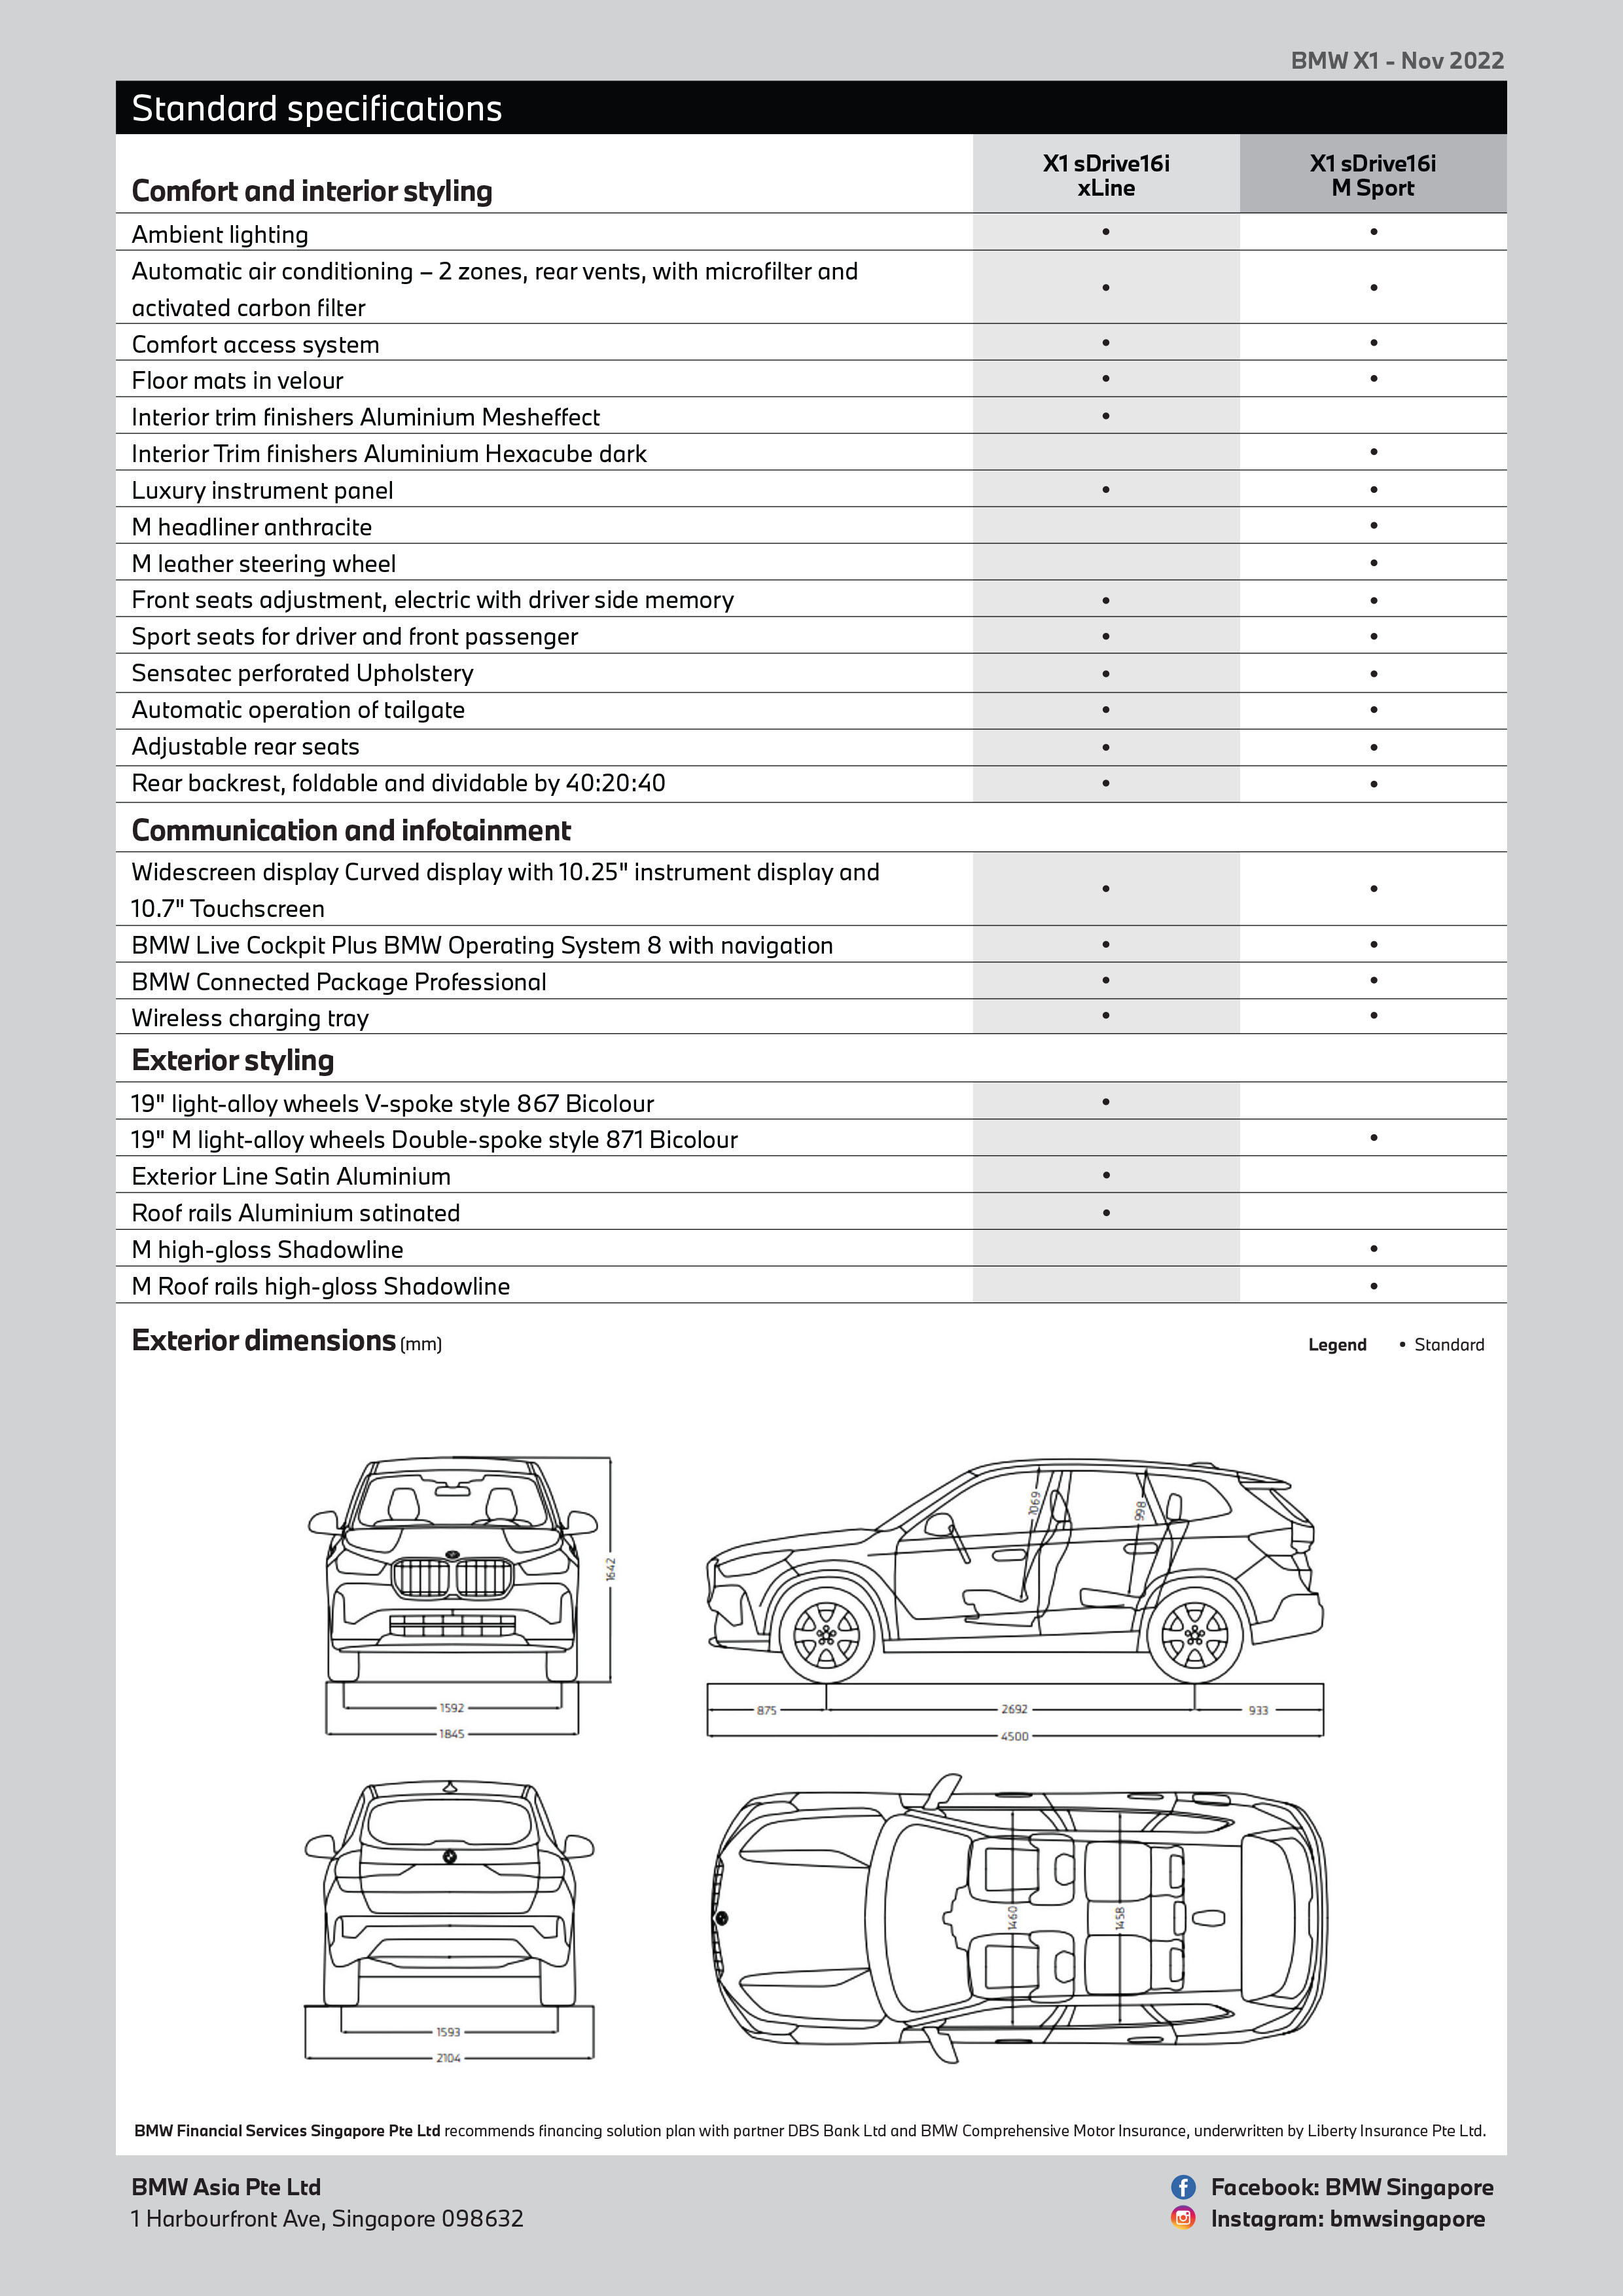 BMW U11_X1(R2) spec sheet